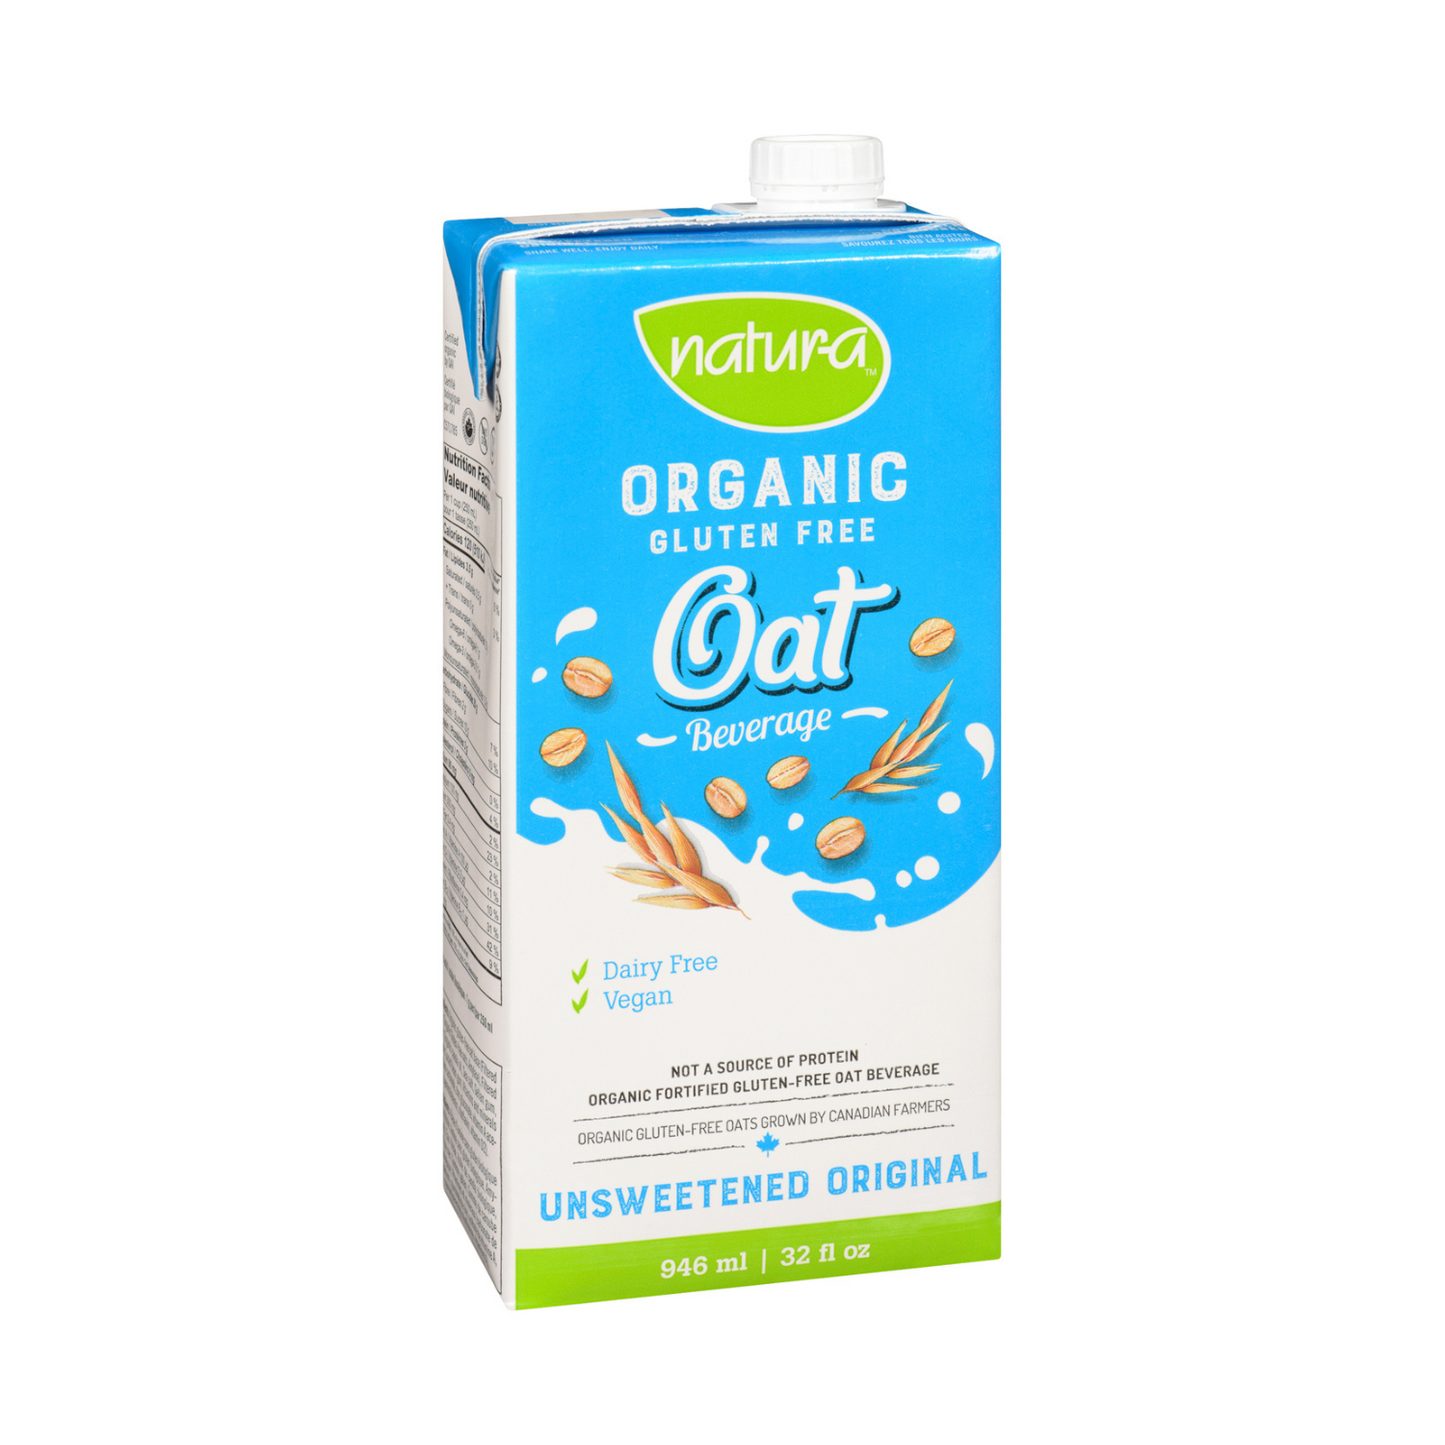 [Case of 12] Natur-a Oat Beverage - Original Unsweetened (Organic), 946 ml.